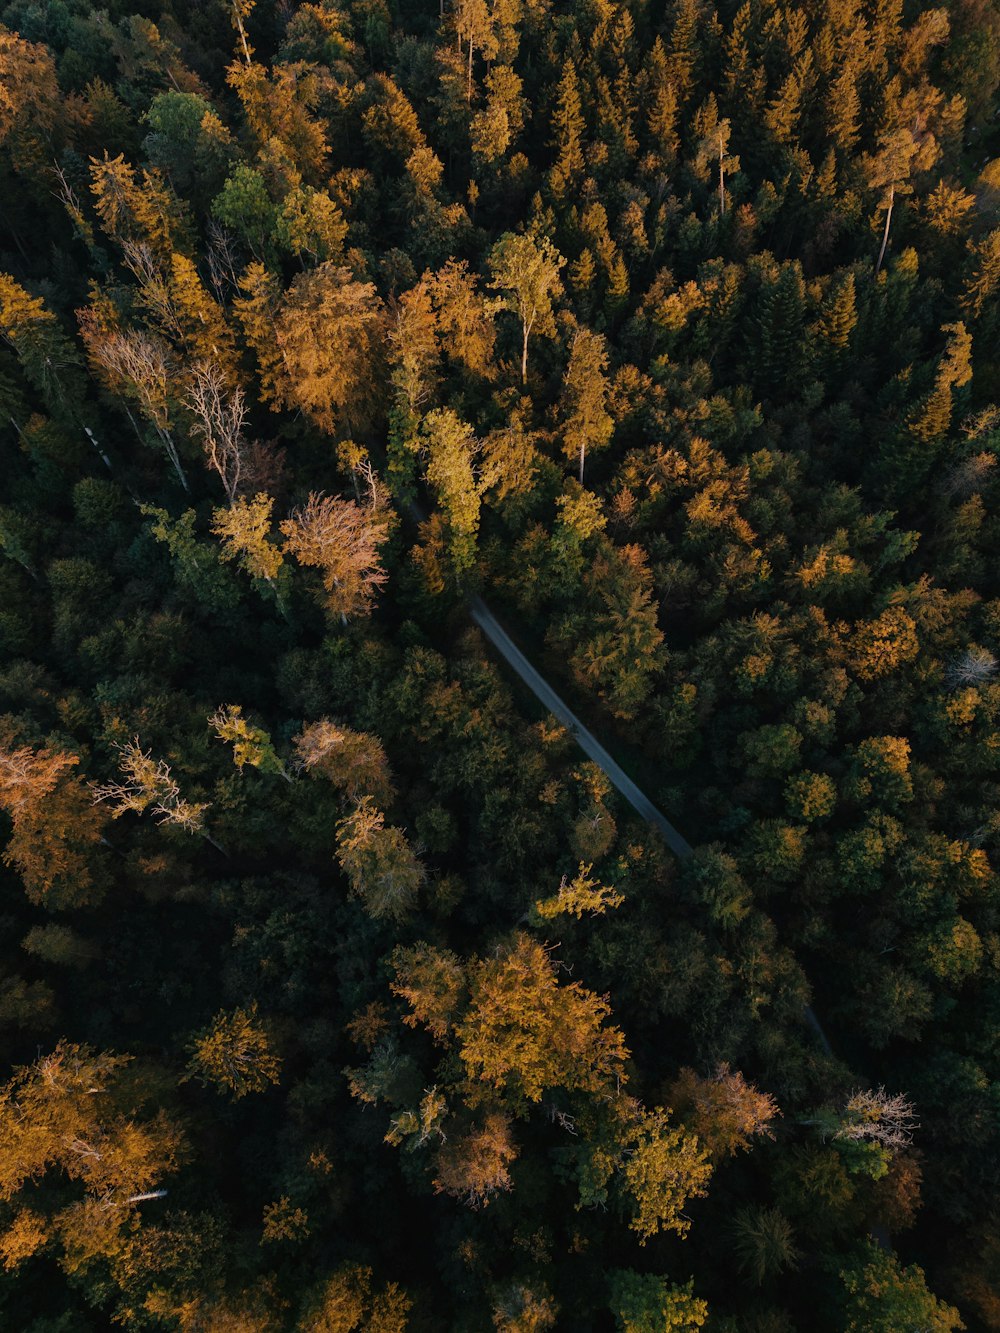 Una veduta aerea di una foresta in autunno